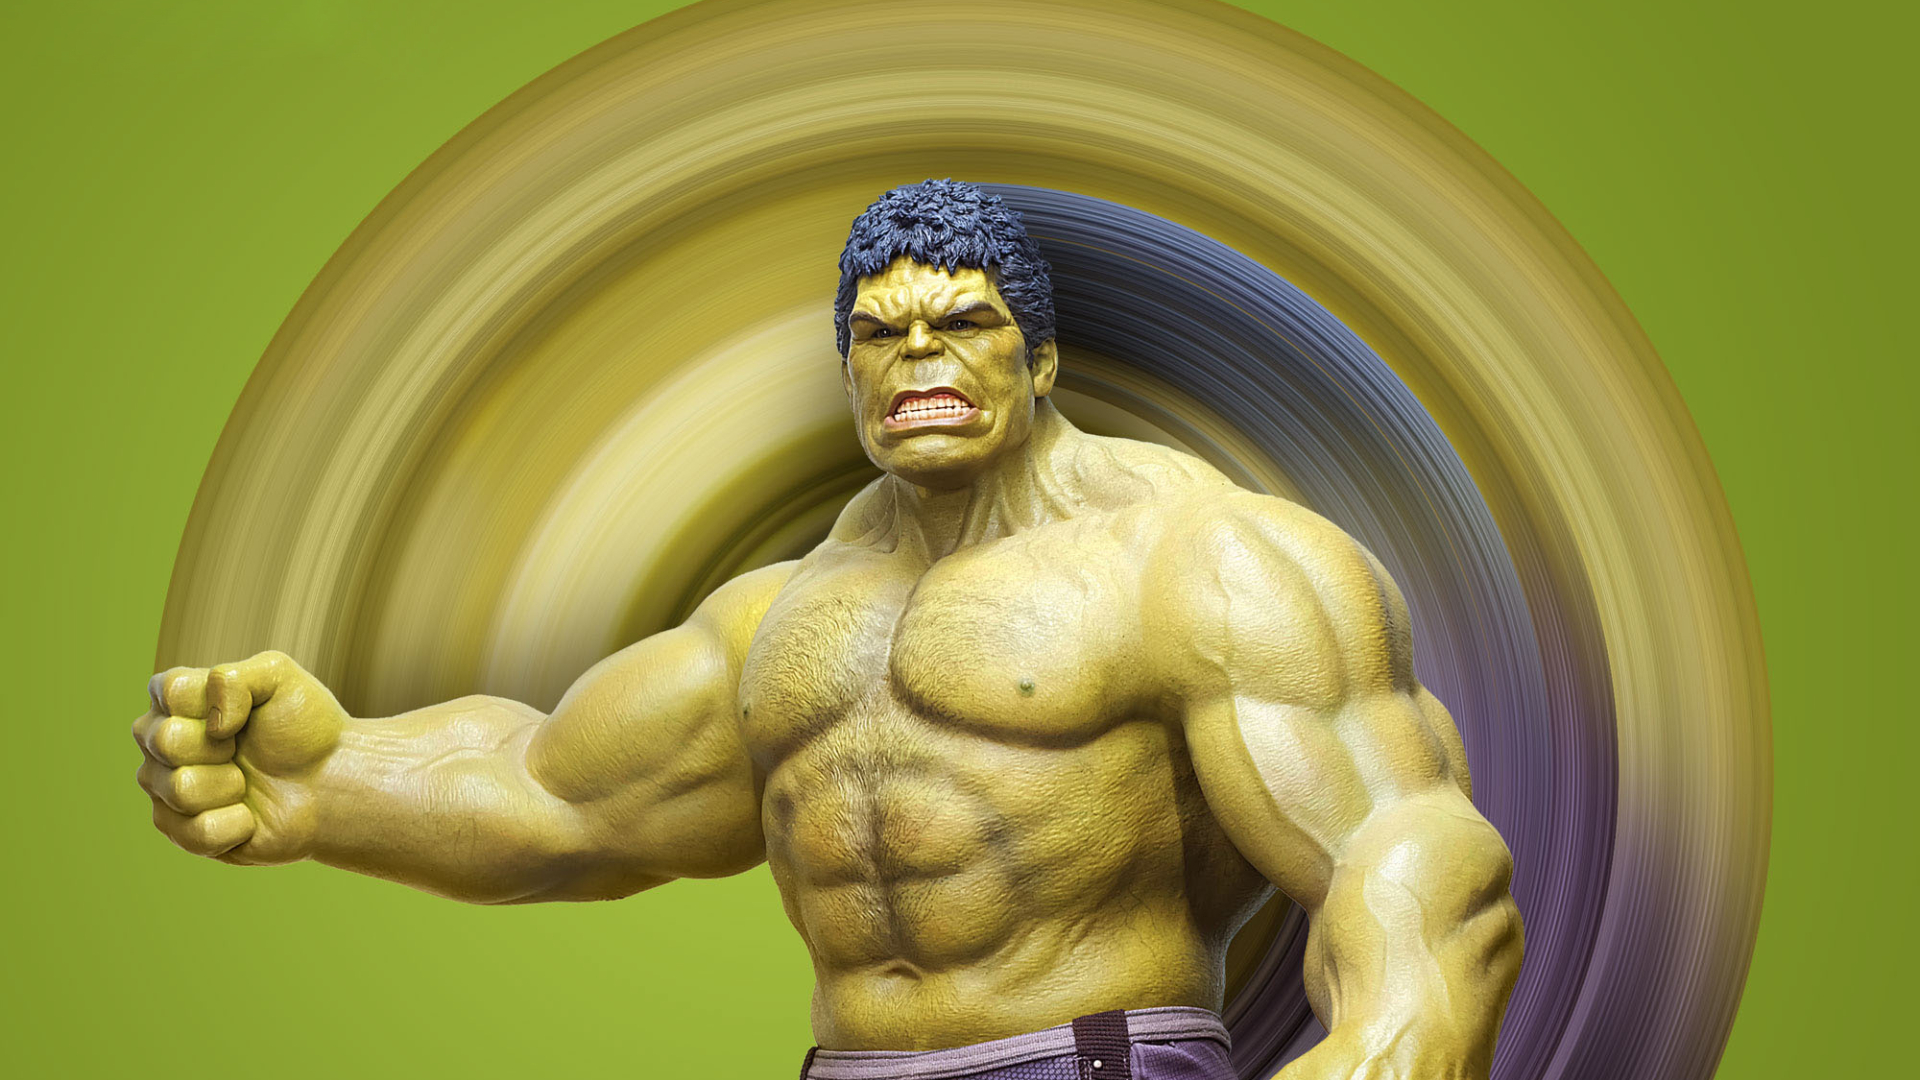 1920x1080 Hulk Avengers Endgame Art 1080P Laptop Full HD Wallpaper, HD  Superheroes 4K Wallpapers, Images, Photos and Background - Wallpapers Den